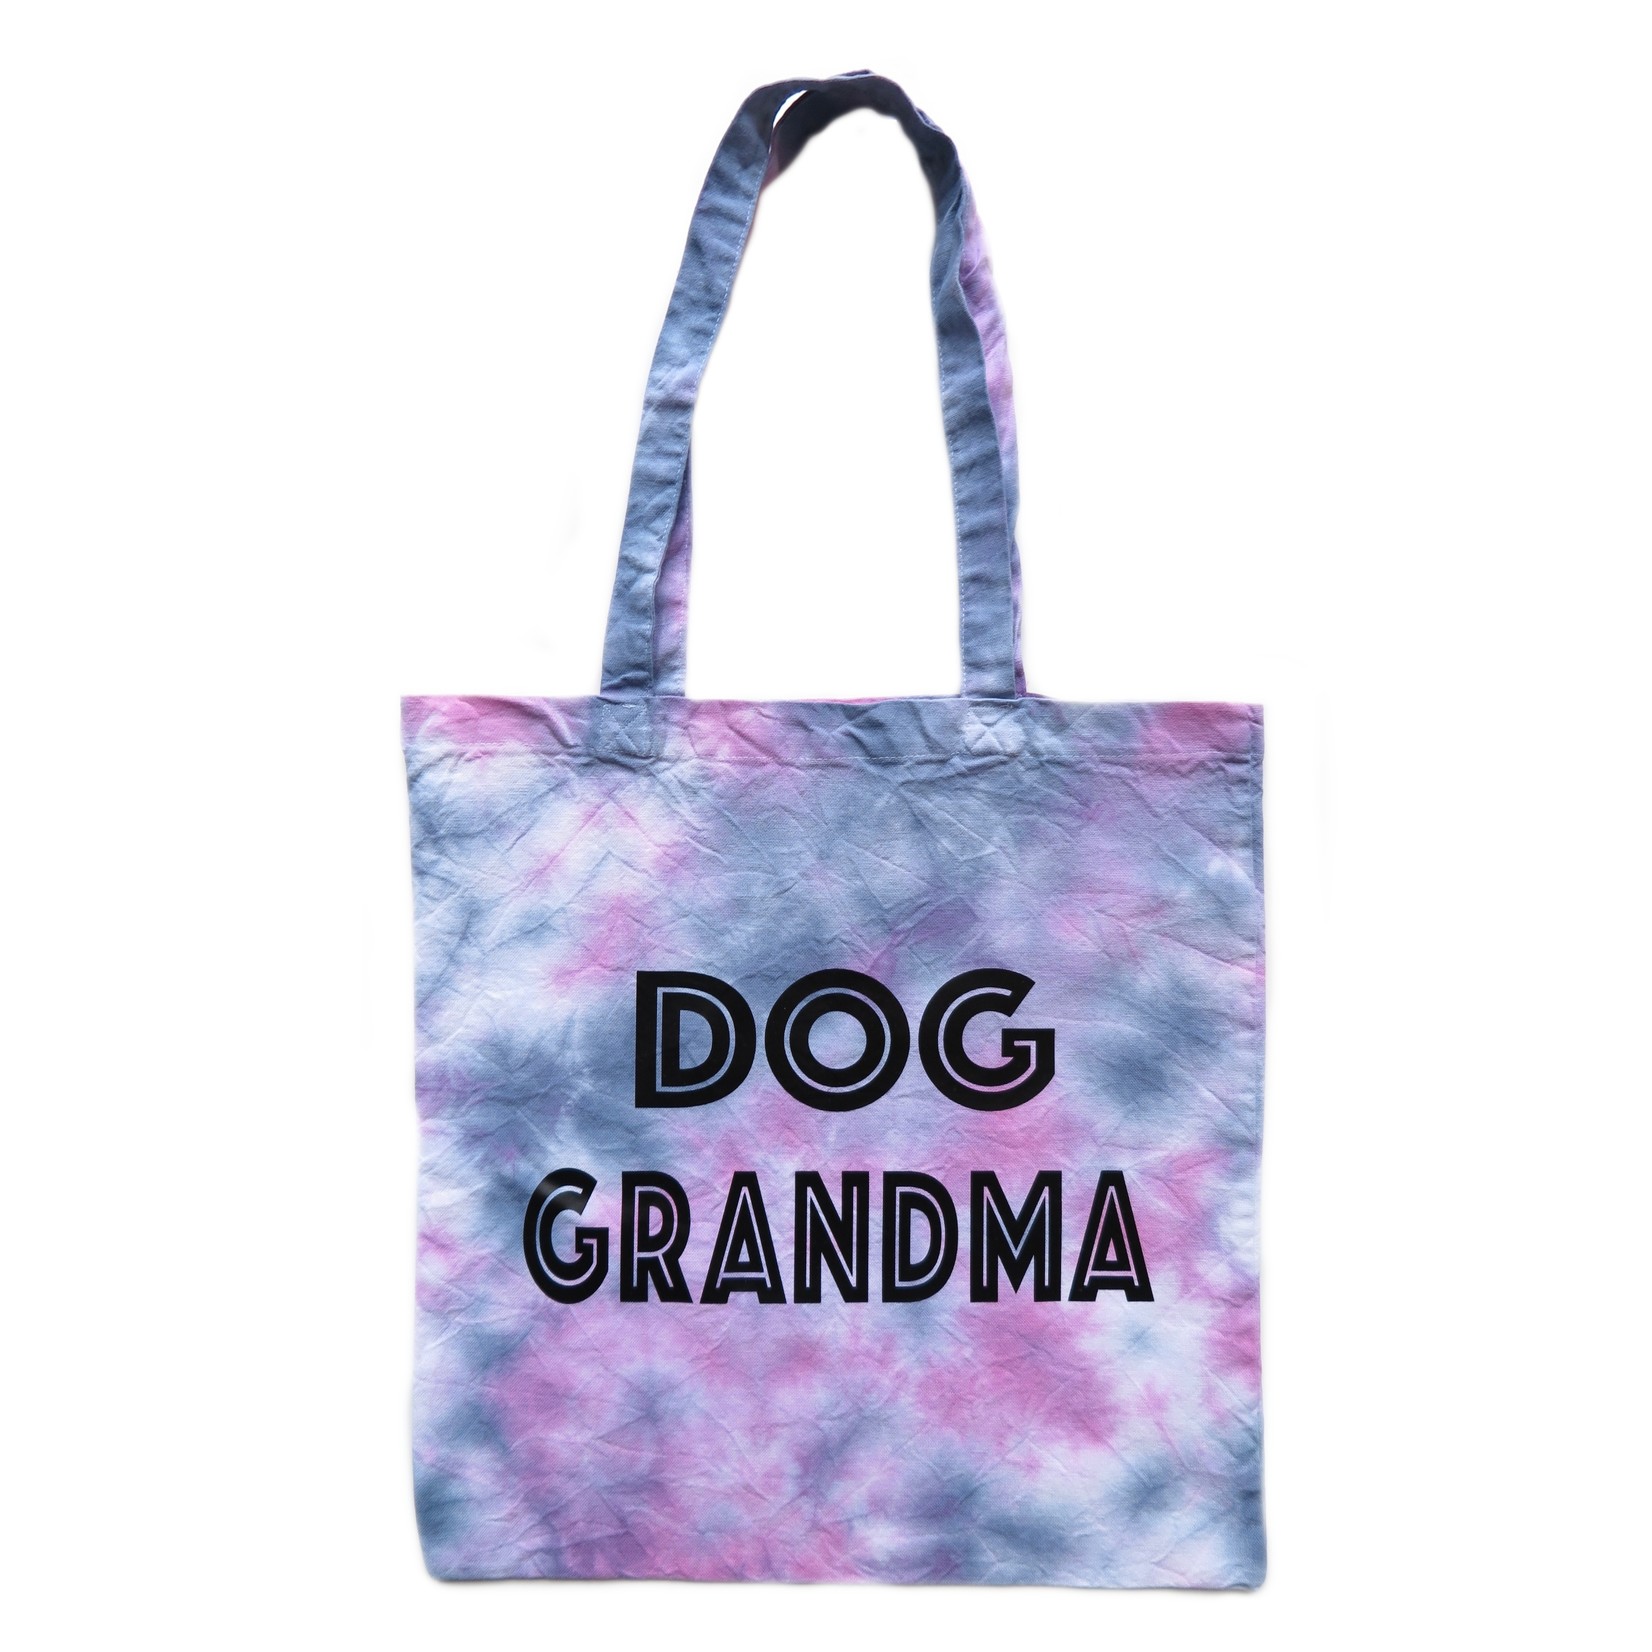 Dog grandma roze tas